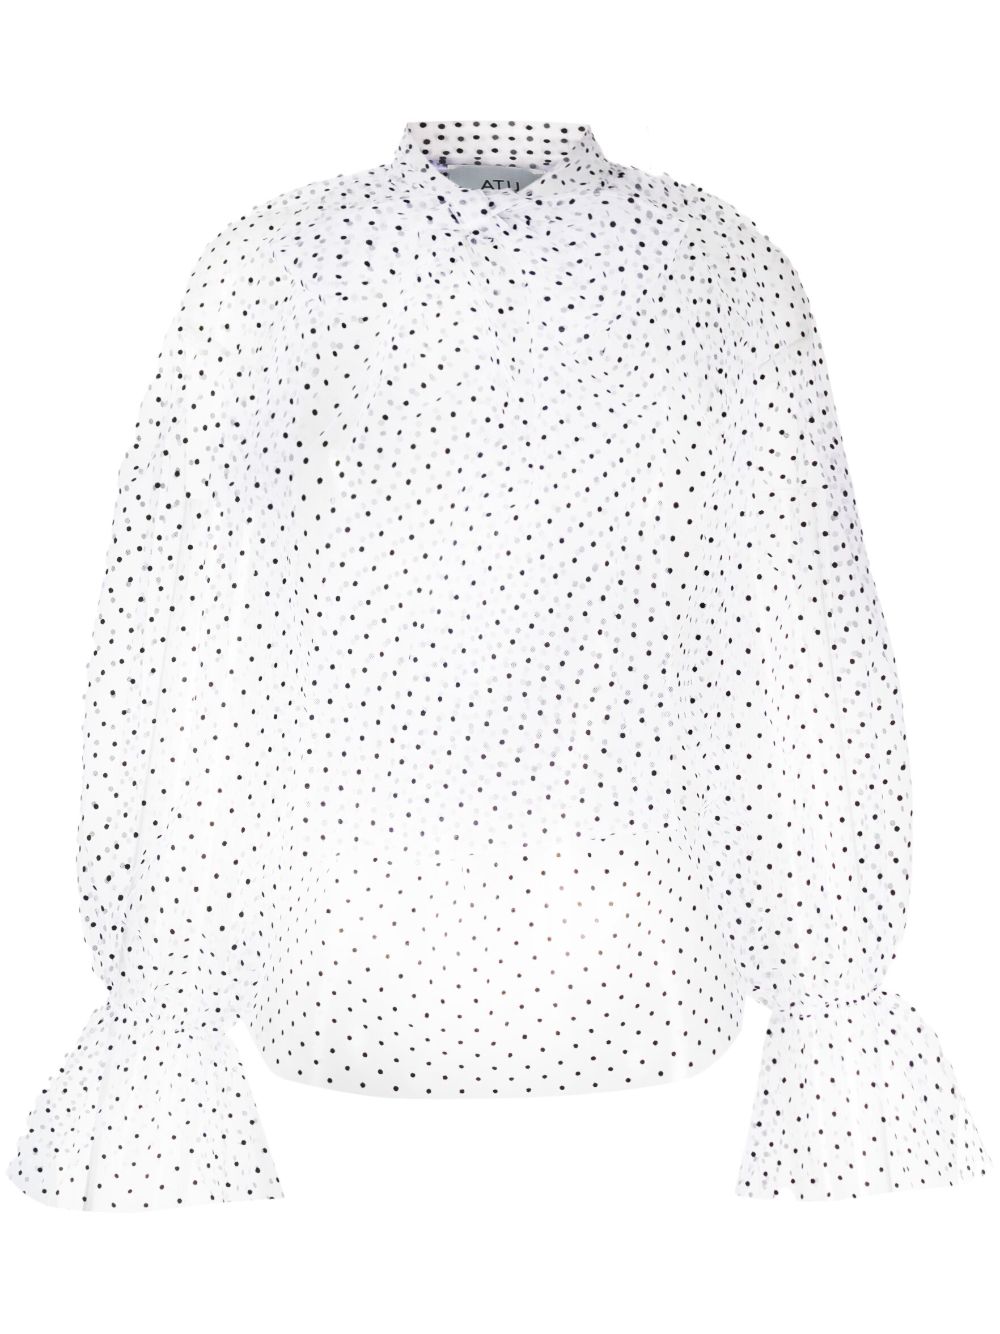 atu body couture blouse transparente à motif de pois - blanc